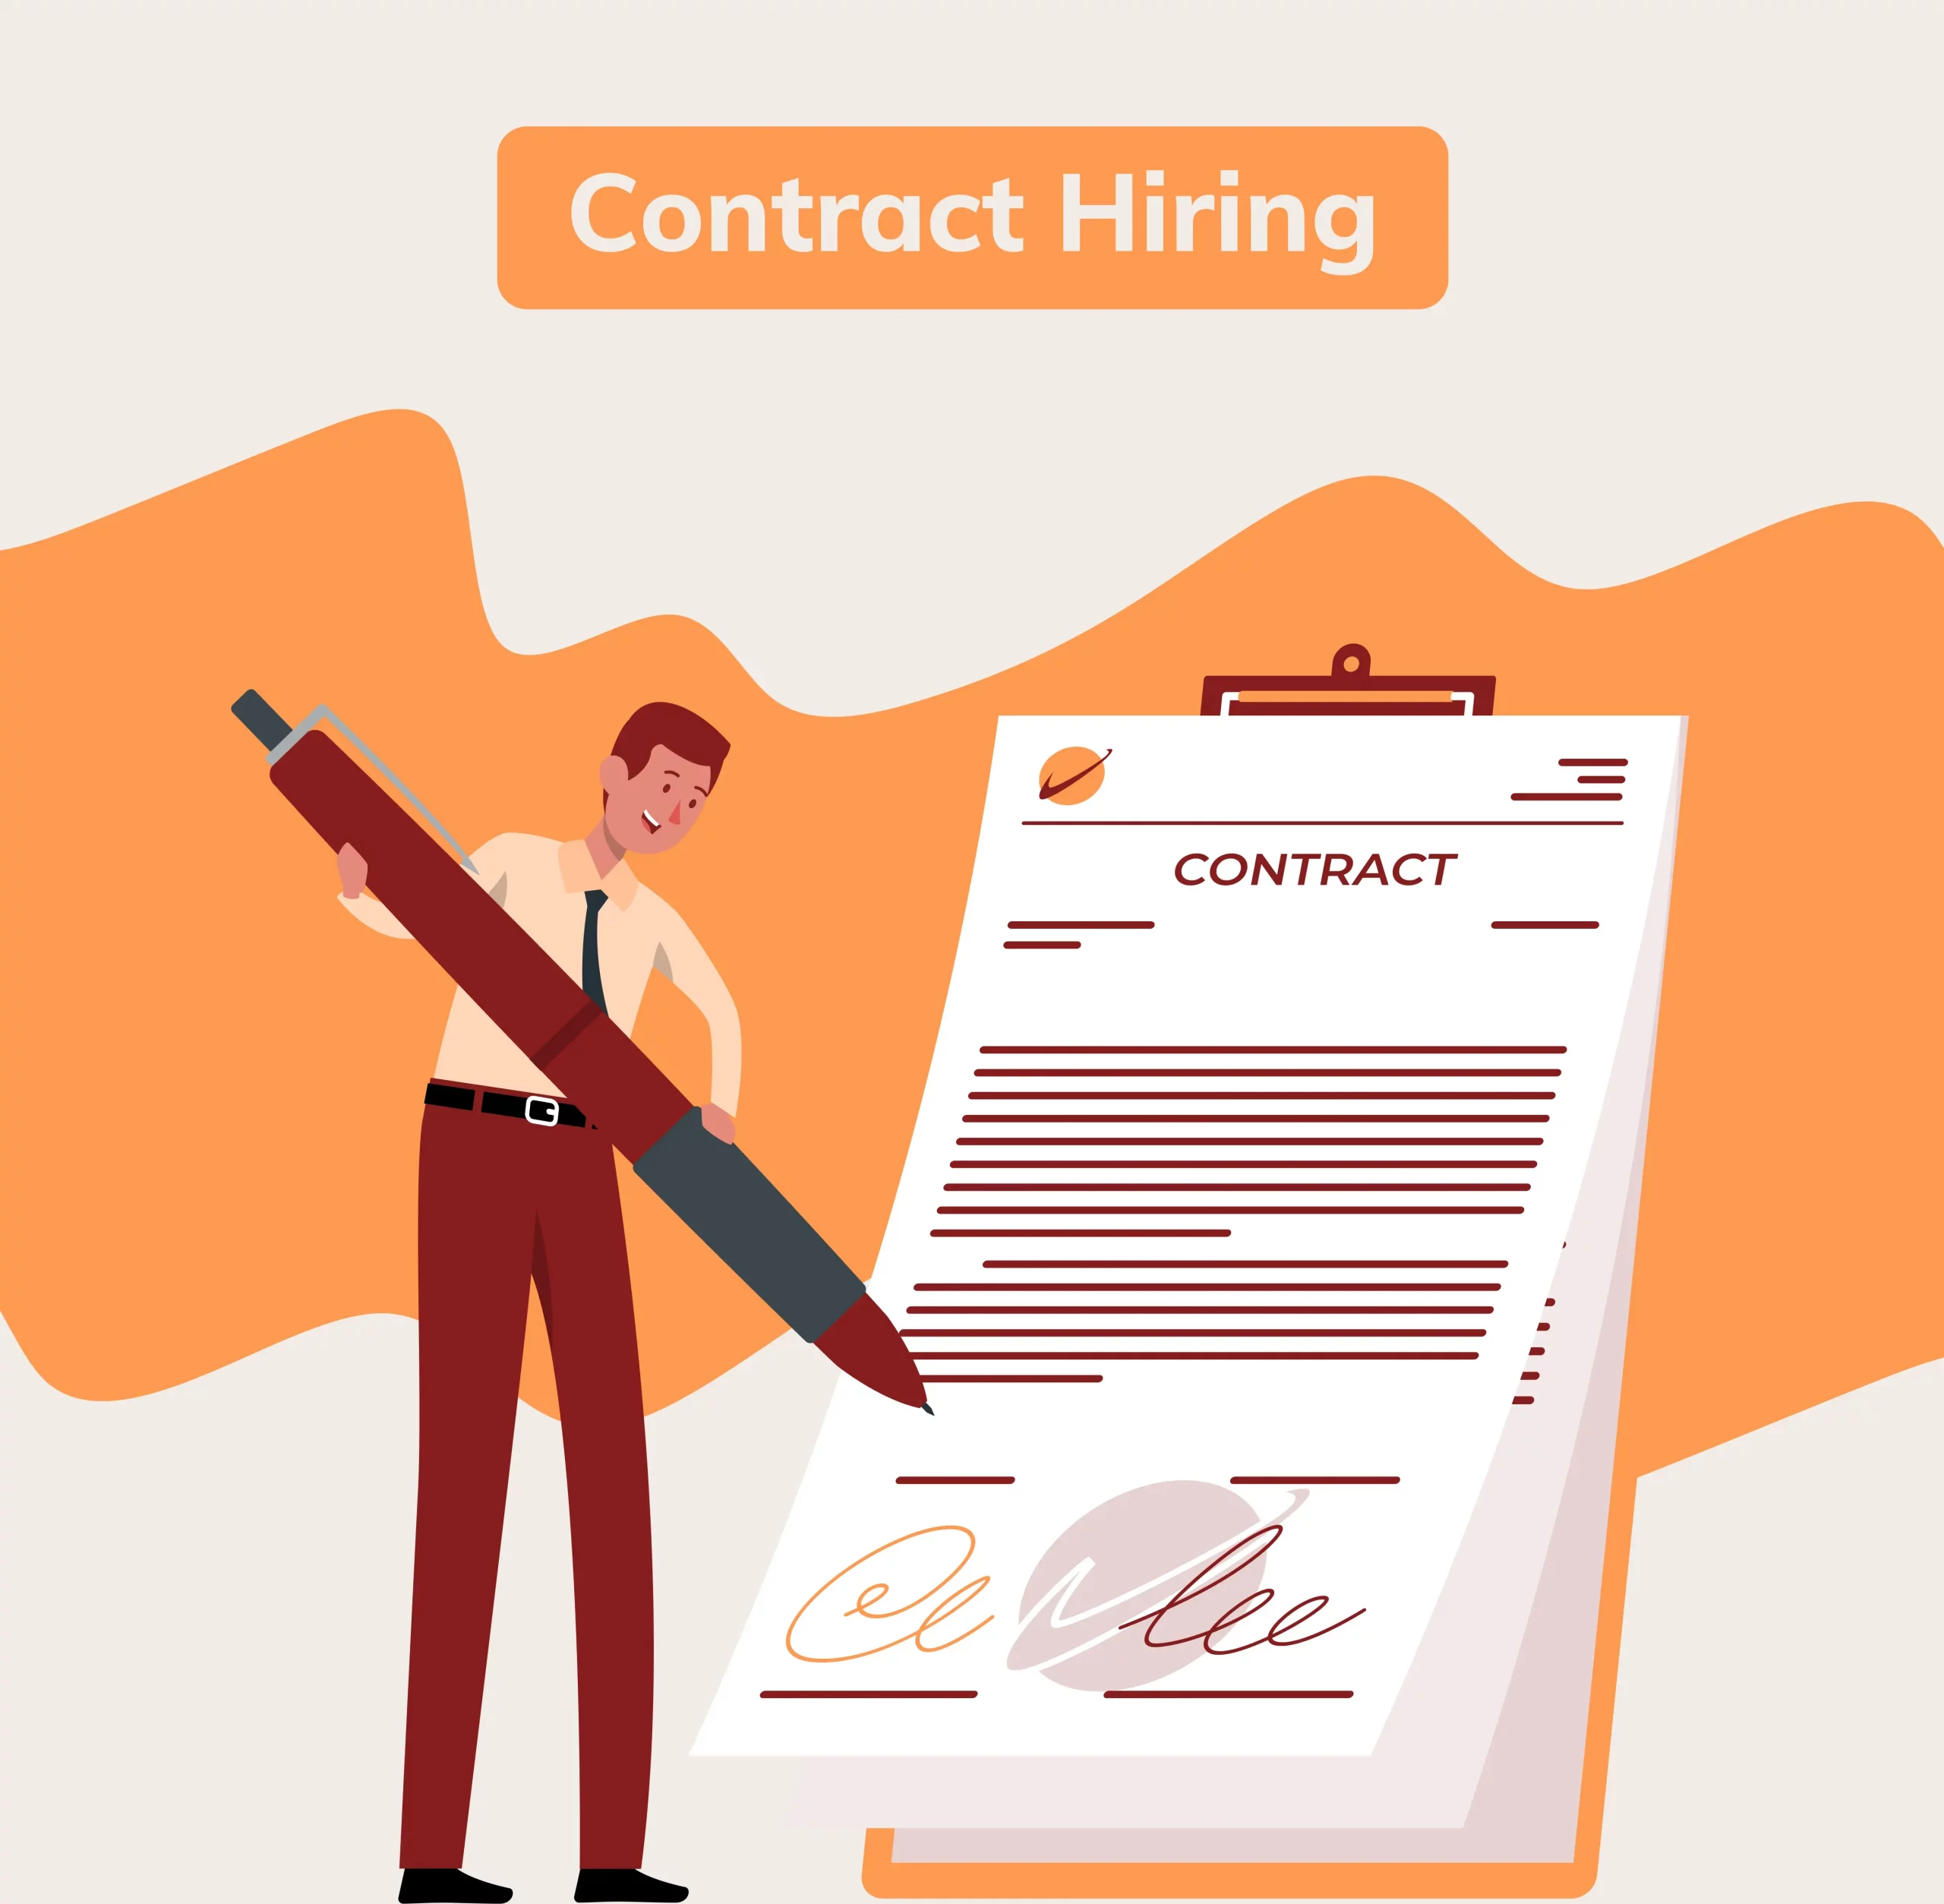 Contract hiring